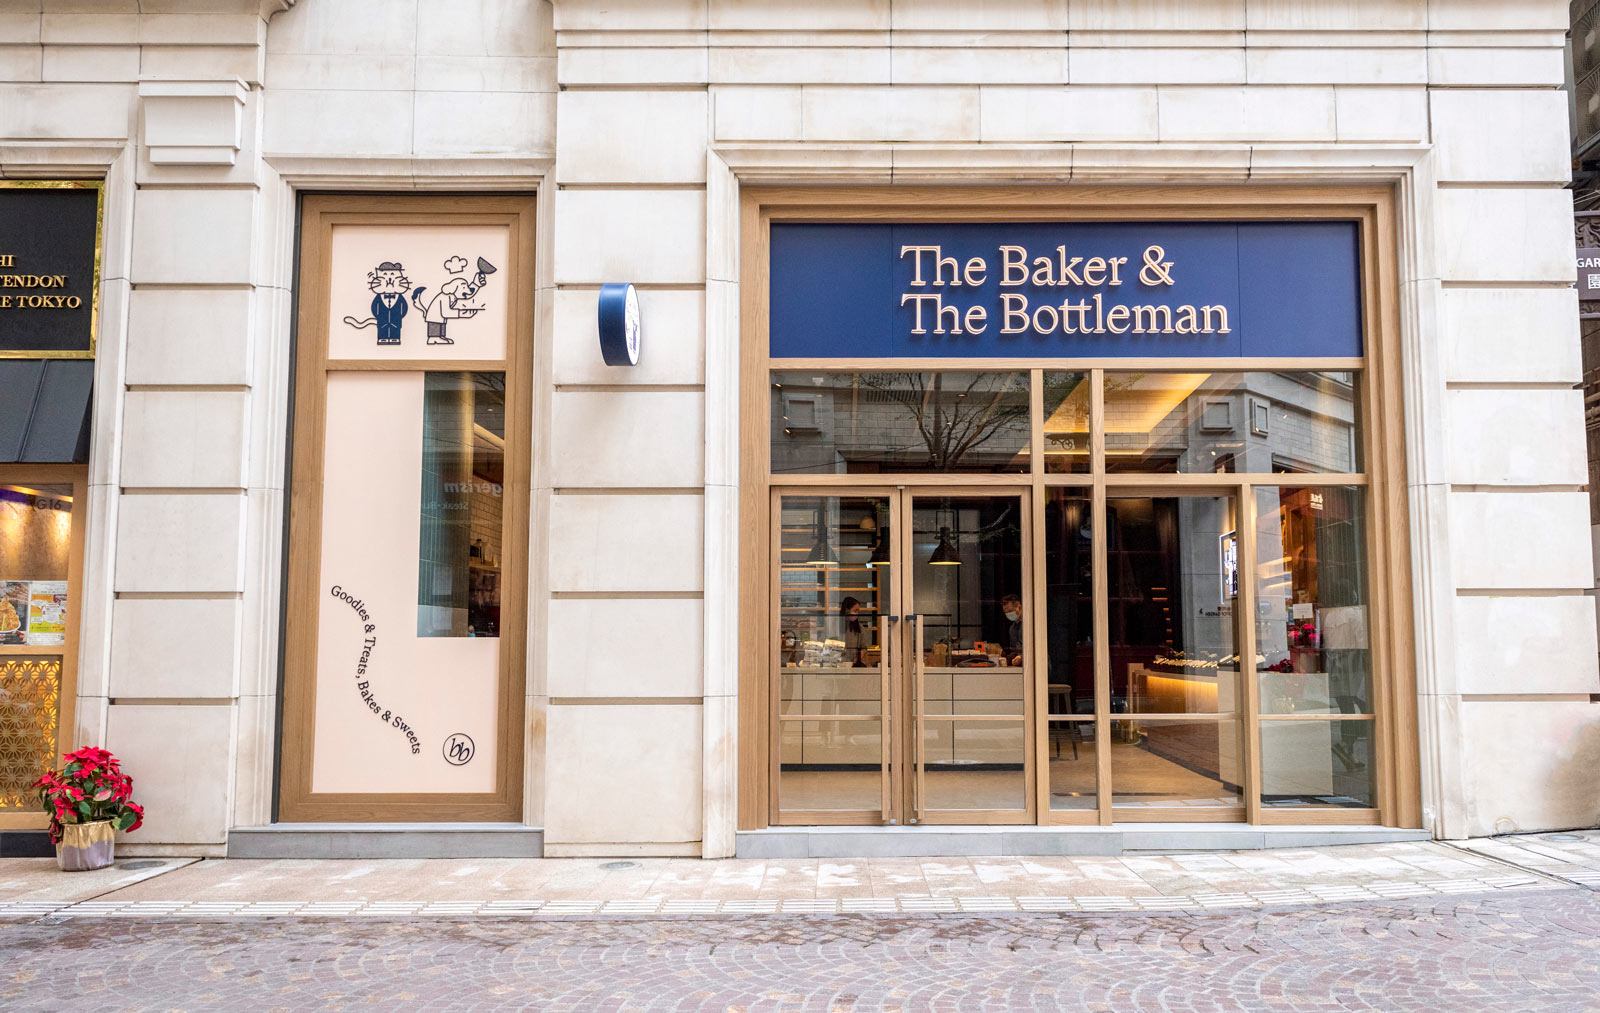 The Baker & The Bottleman exterior